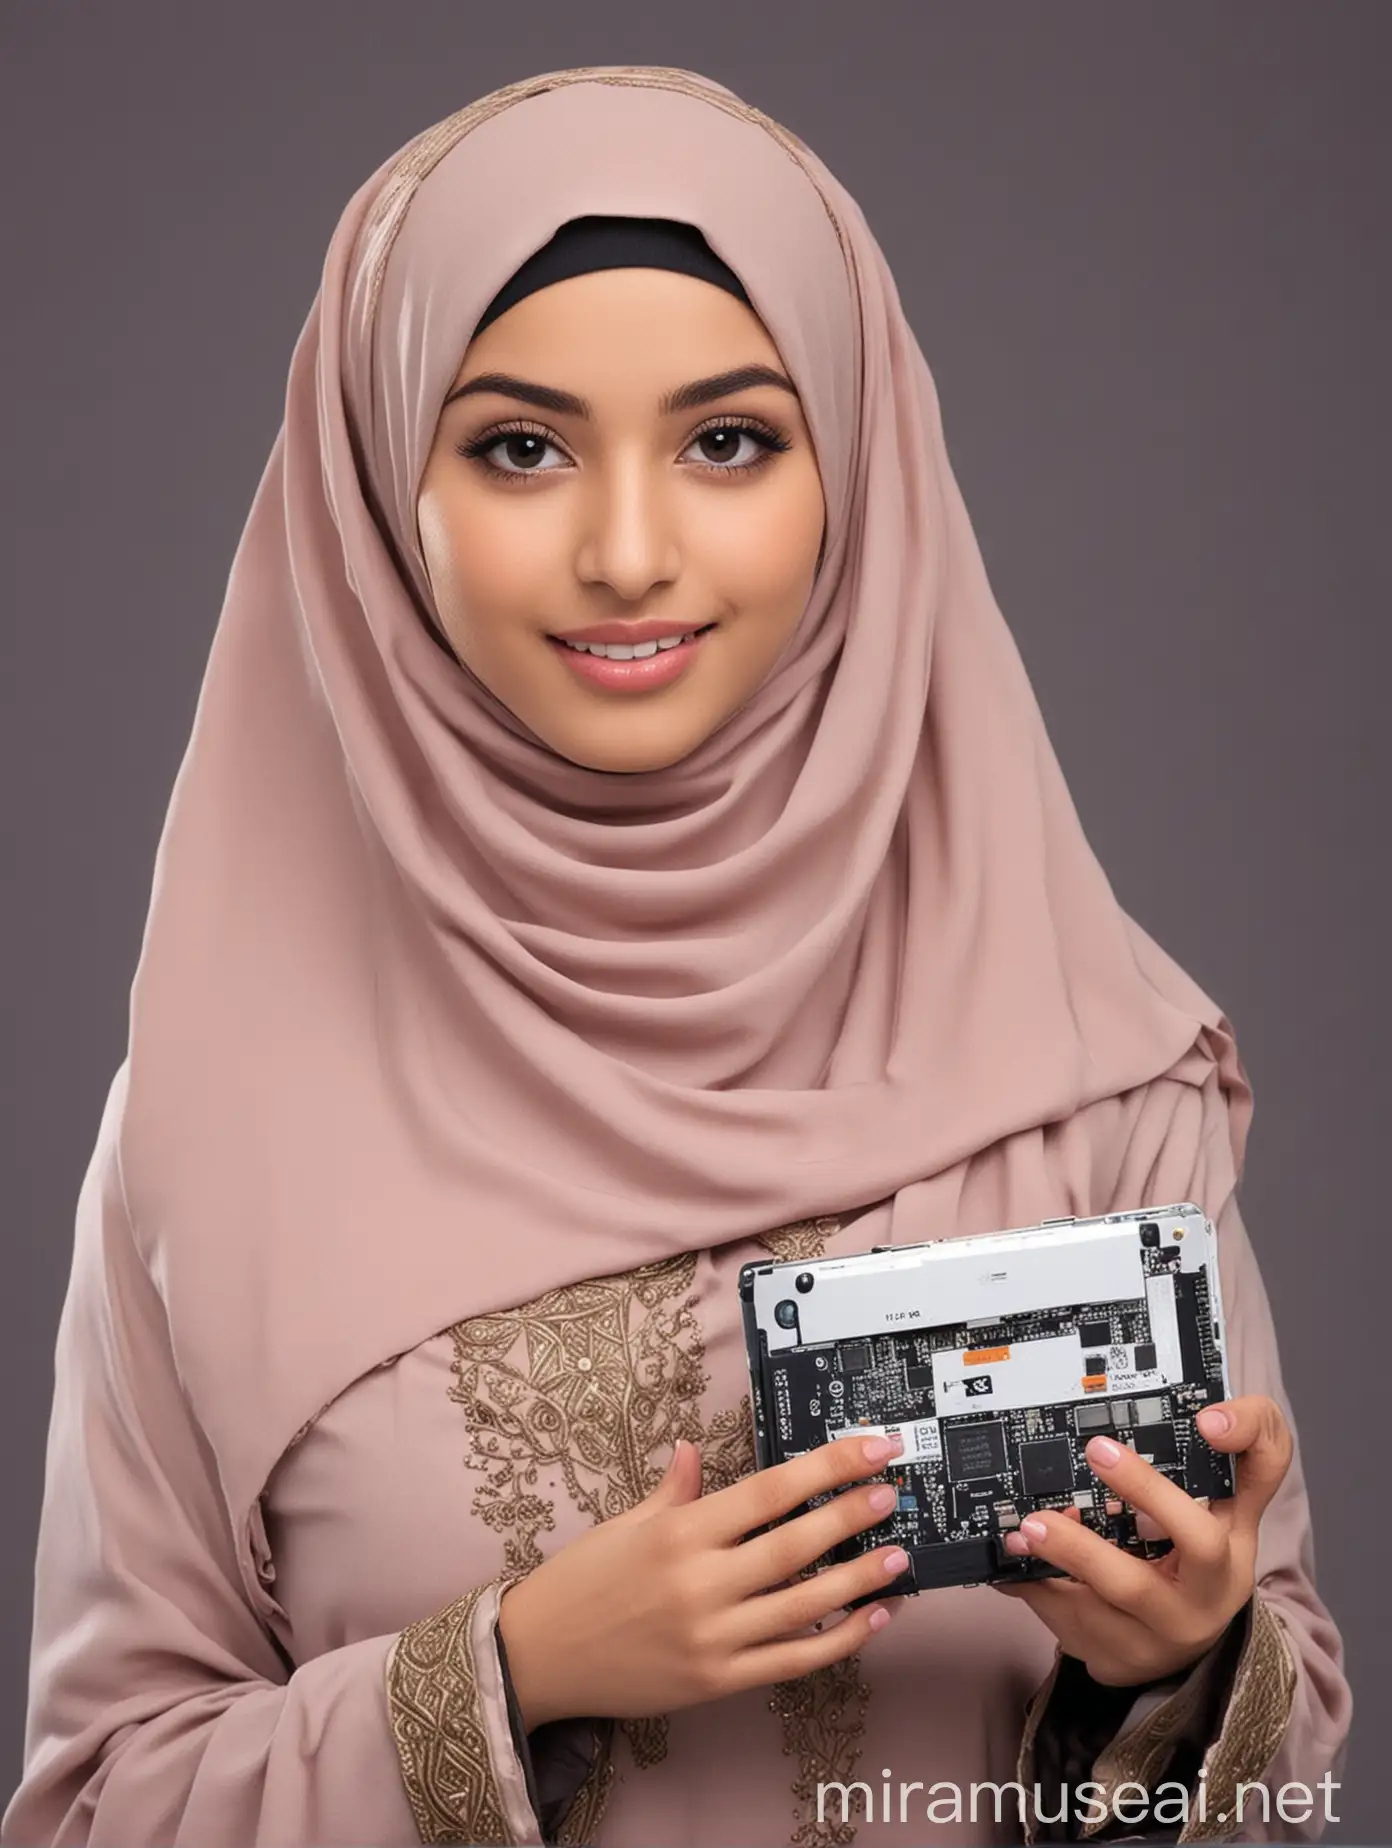 Most beauty Muslim girl, selling electronics device 